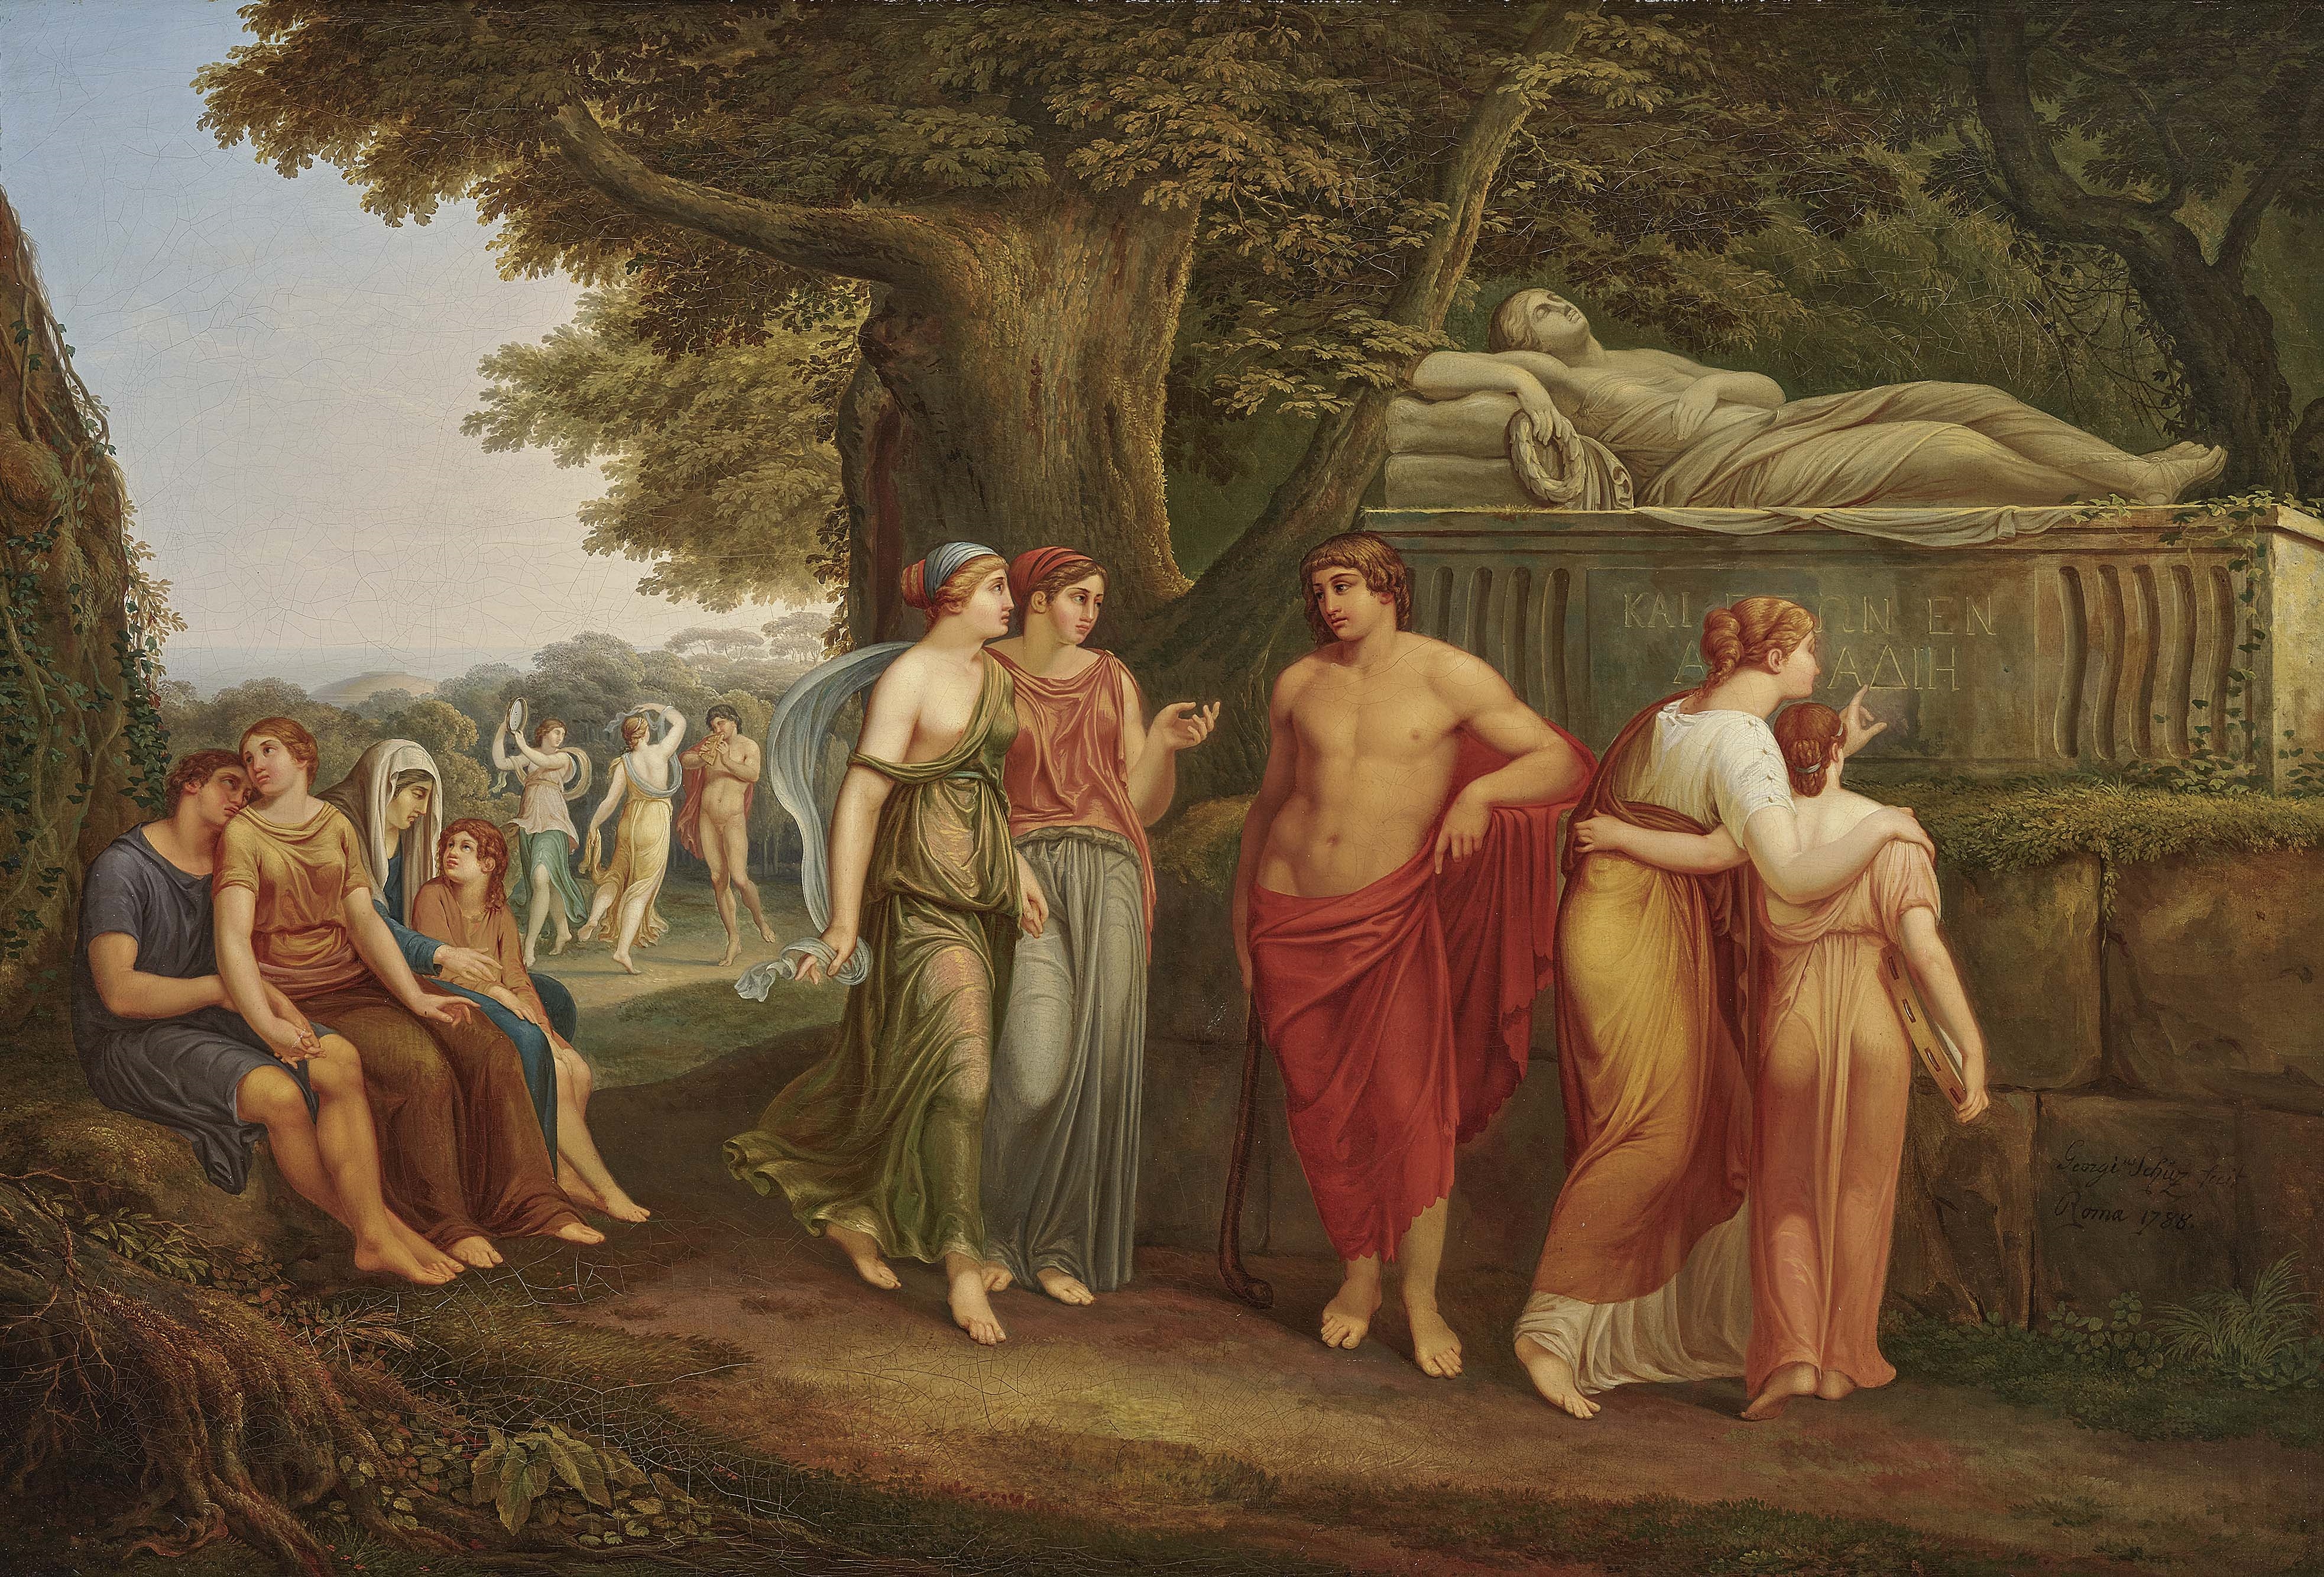 Artwork by Johann Georg Schütz, Et in Arcadia Ego, Made of Oil on canvas